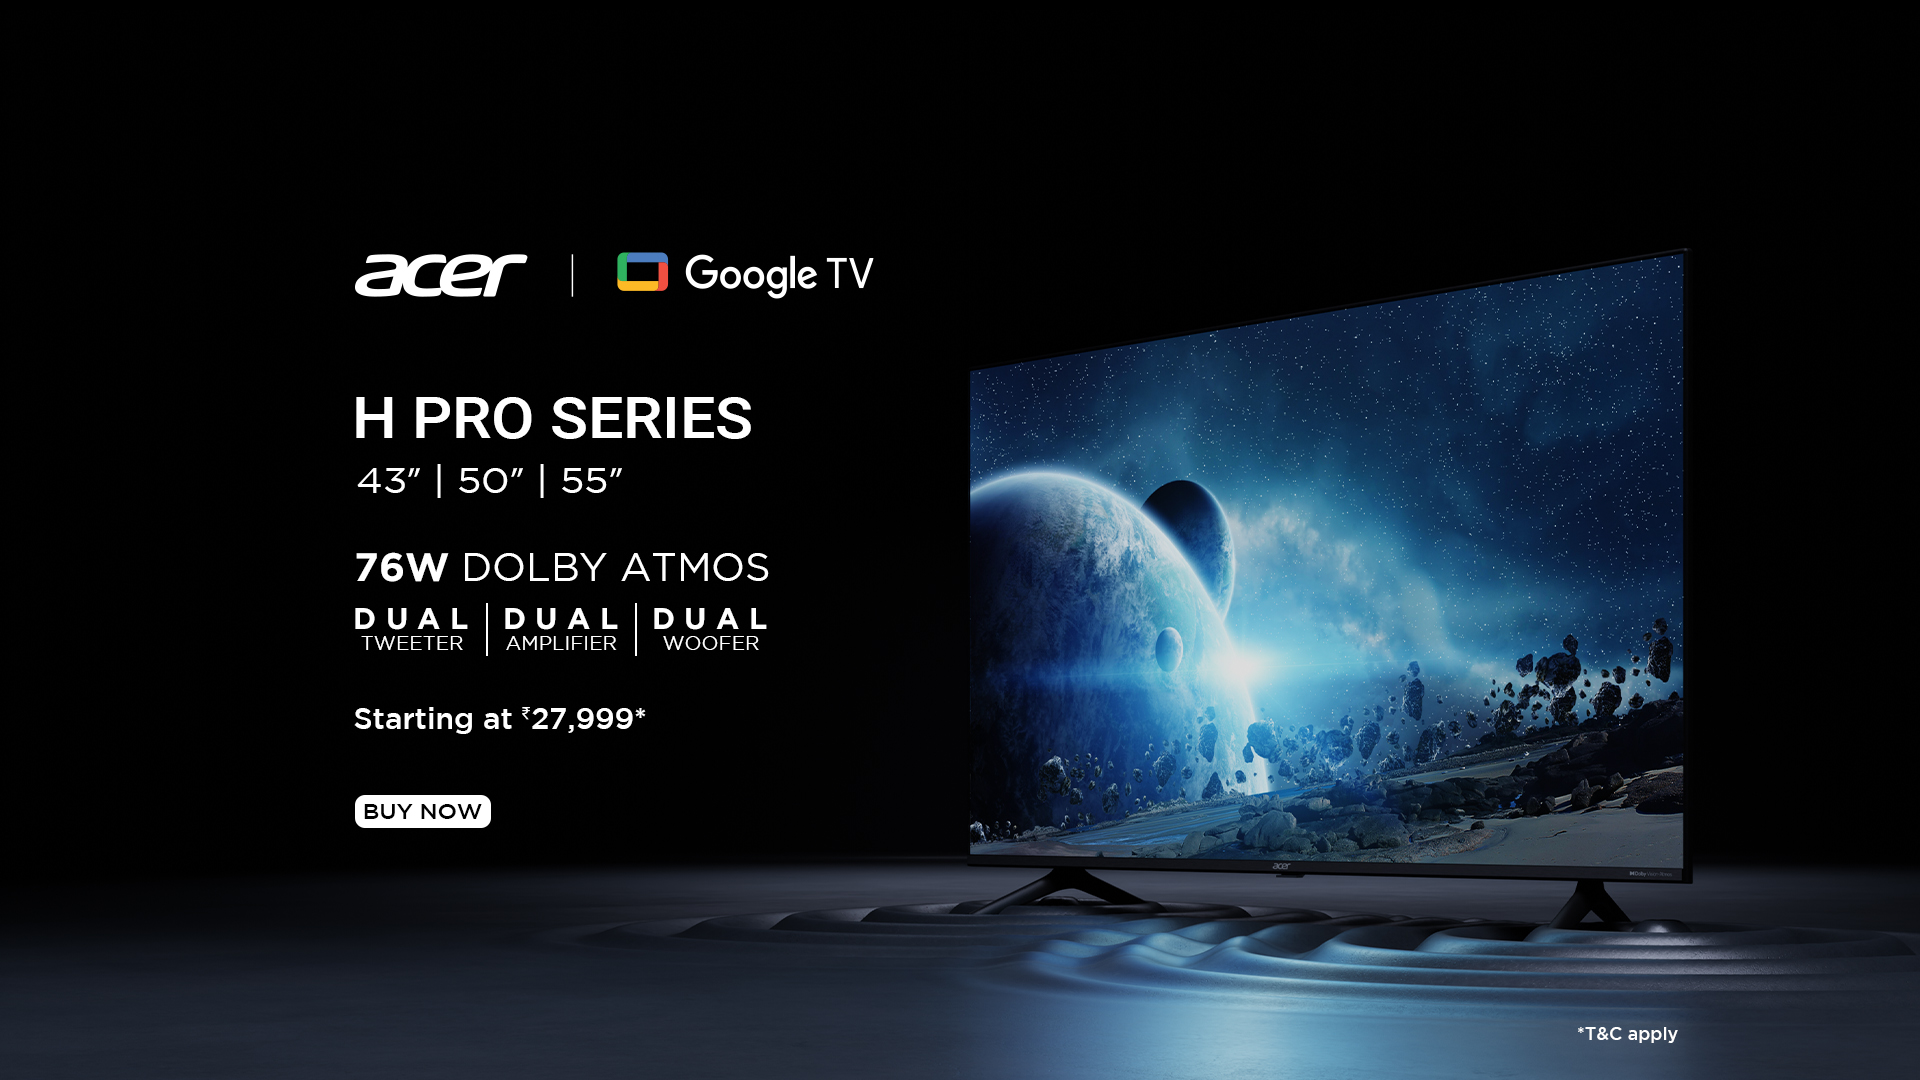 Acer TV | H Pro Series | Google TV